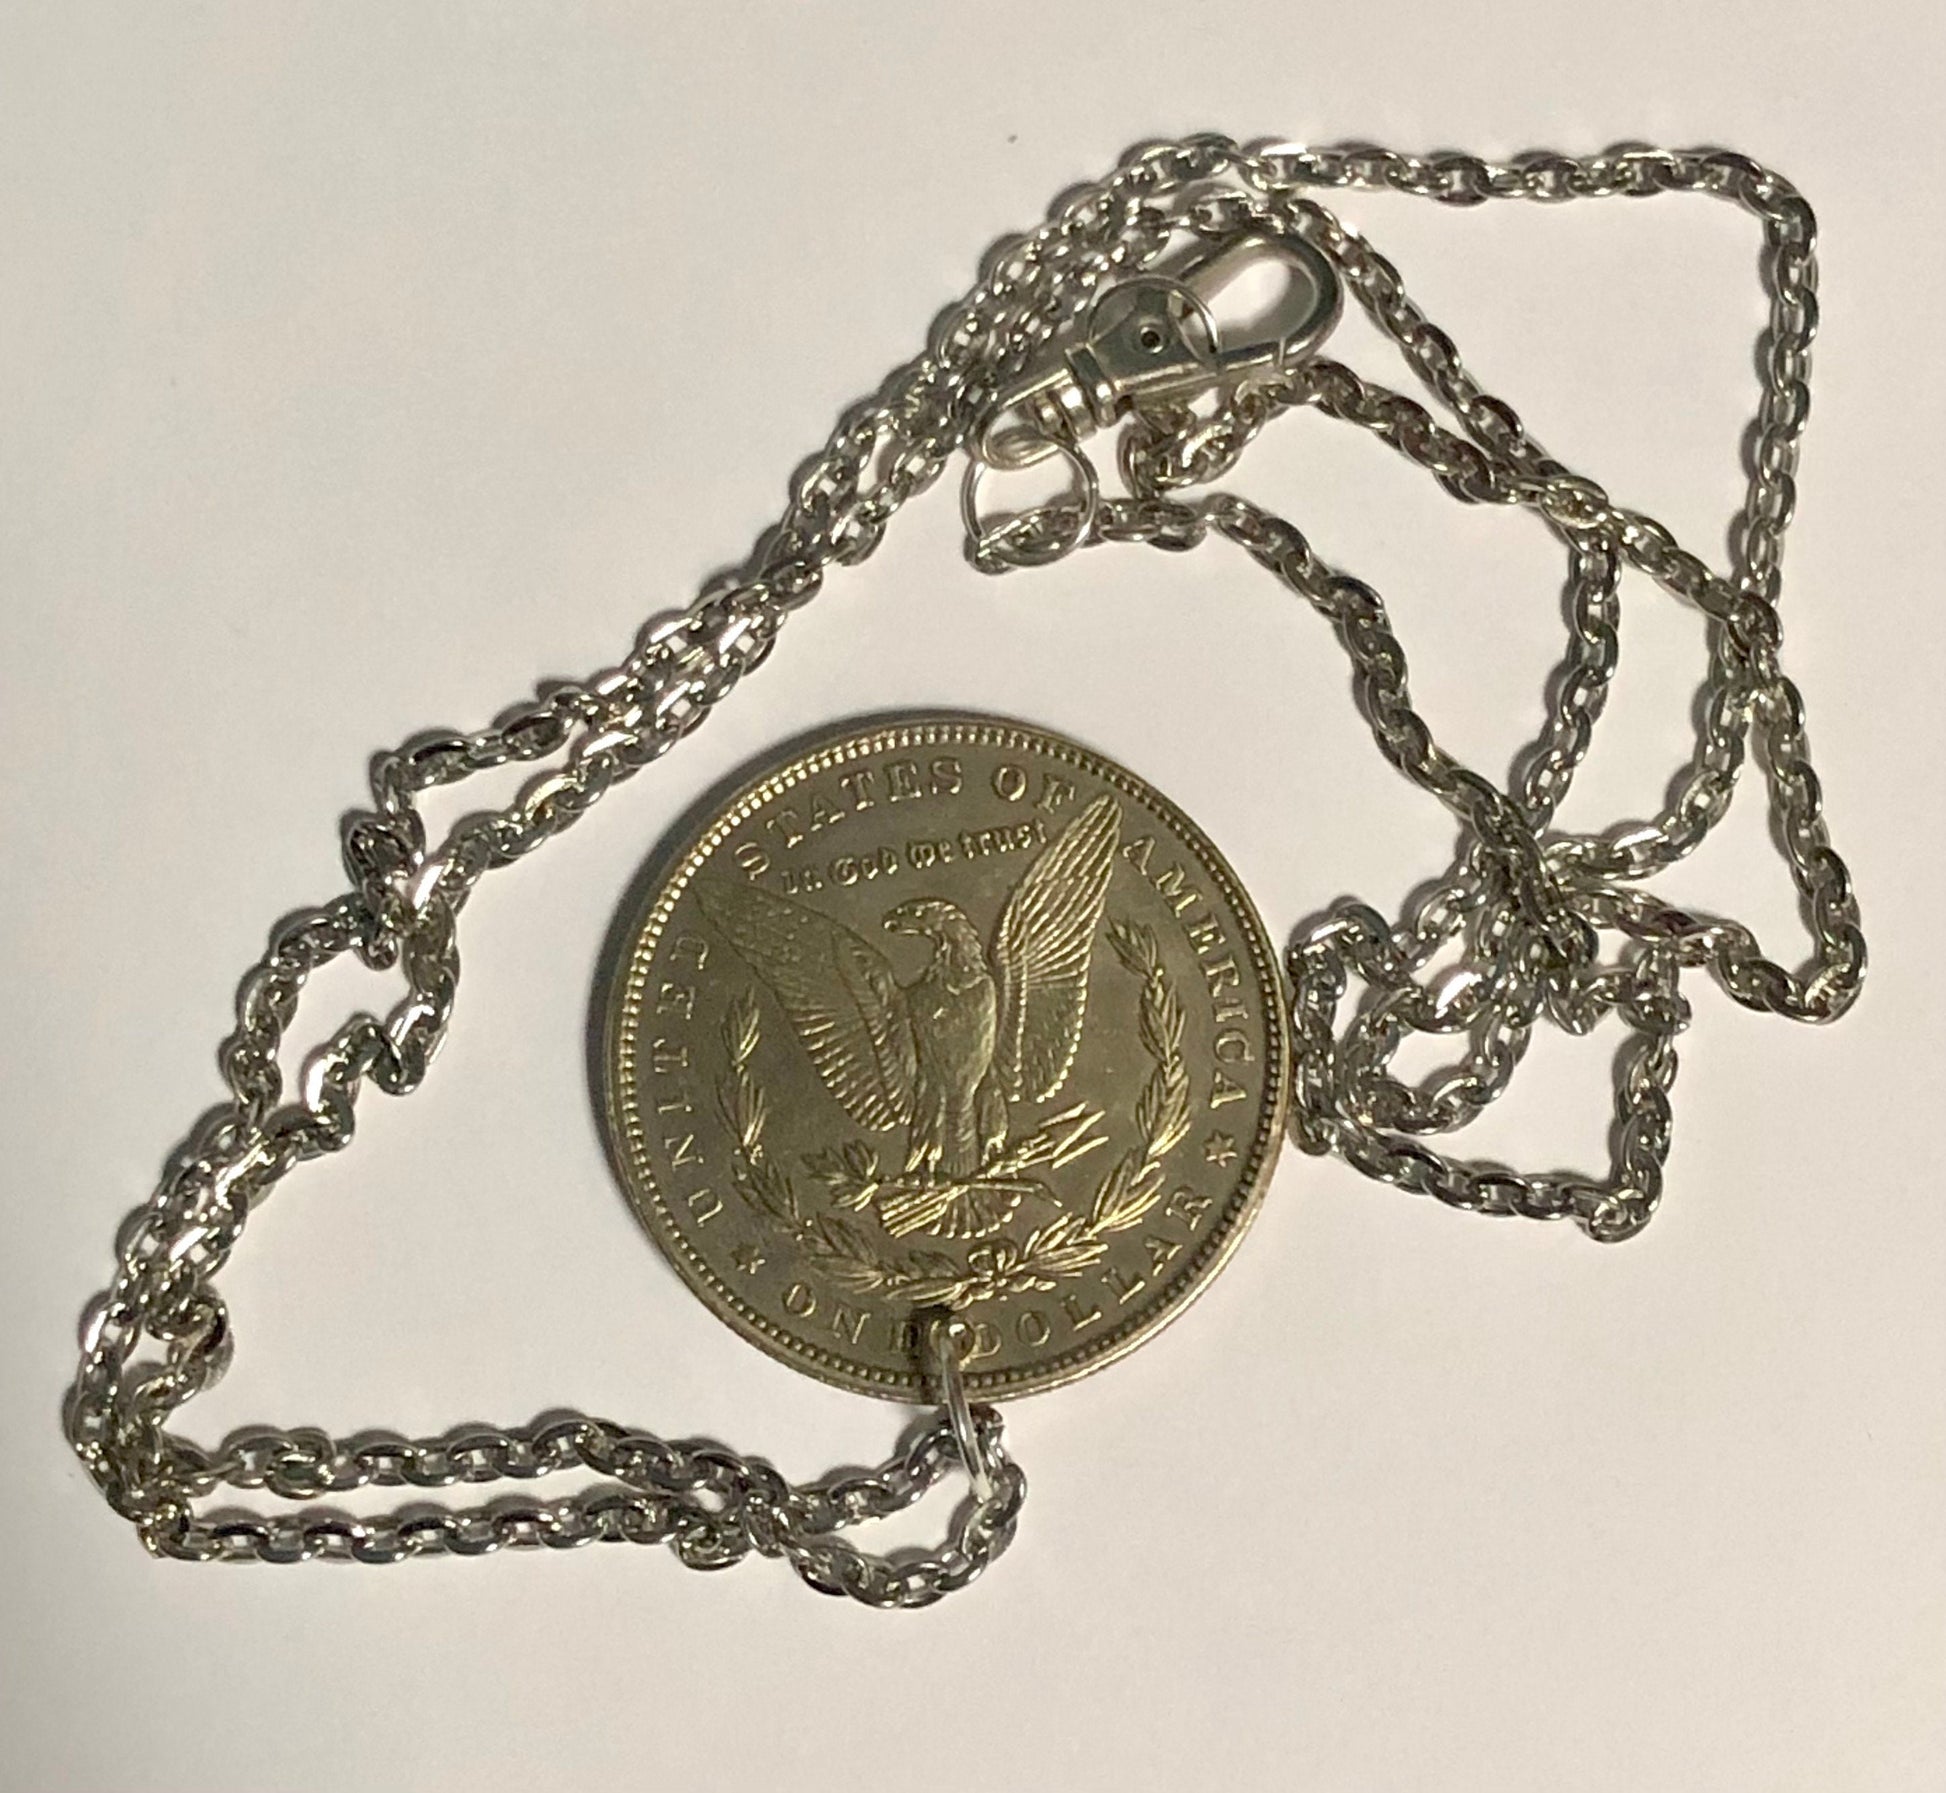 Knights of the Templar Crusader Medallion Coin Pendant Necklace Custom Made Vintage Novelty Coins USA Morgan Dollar Eagle - Coin Enthusiast